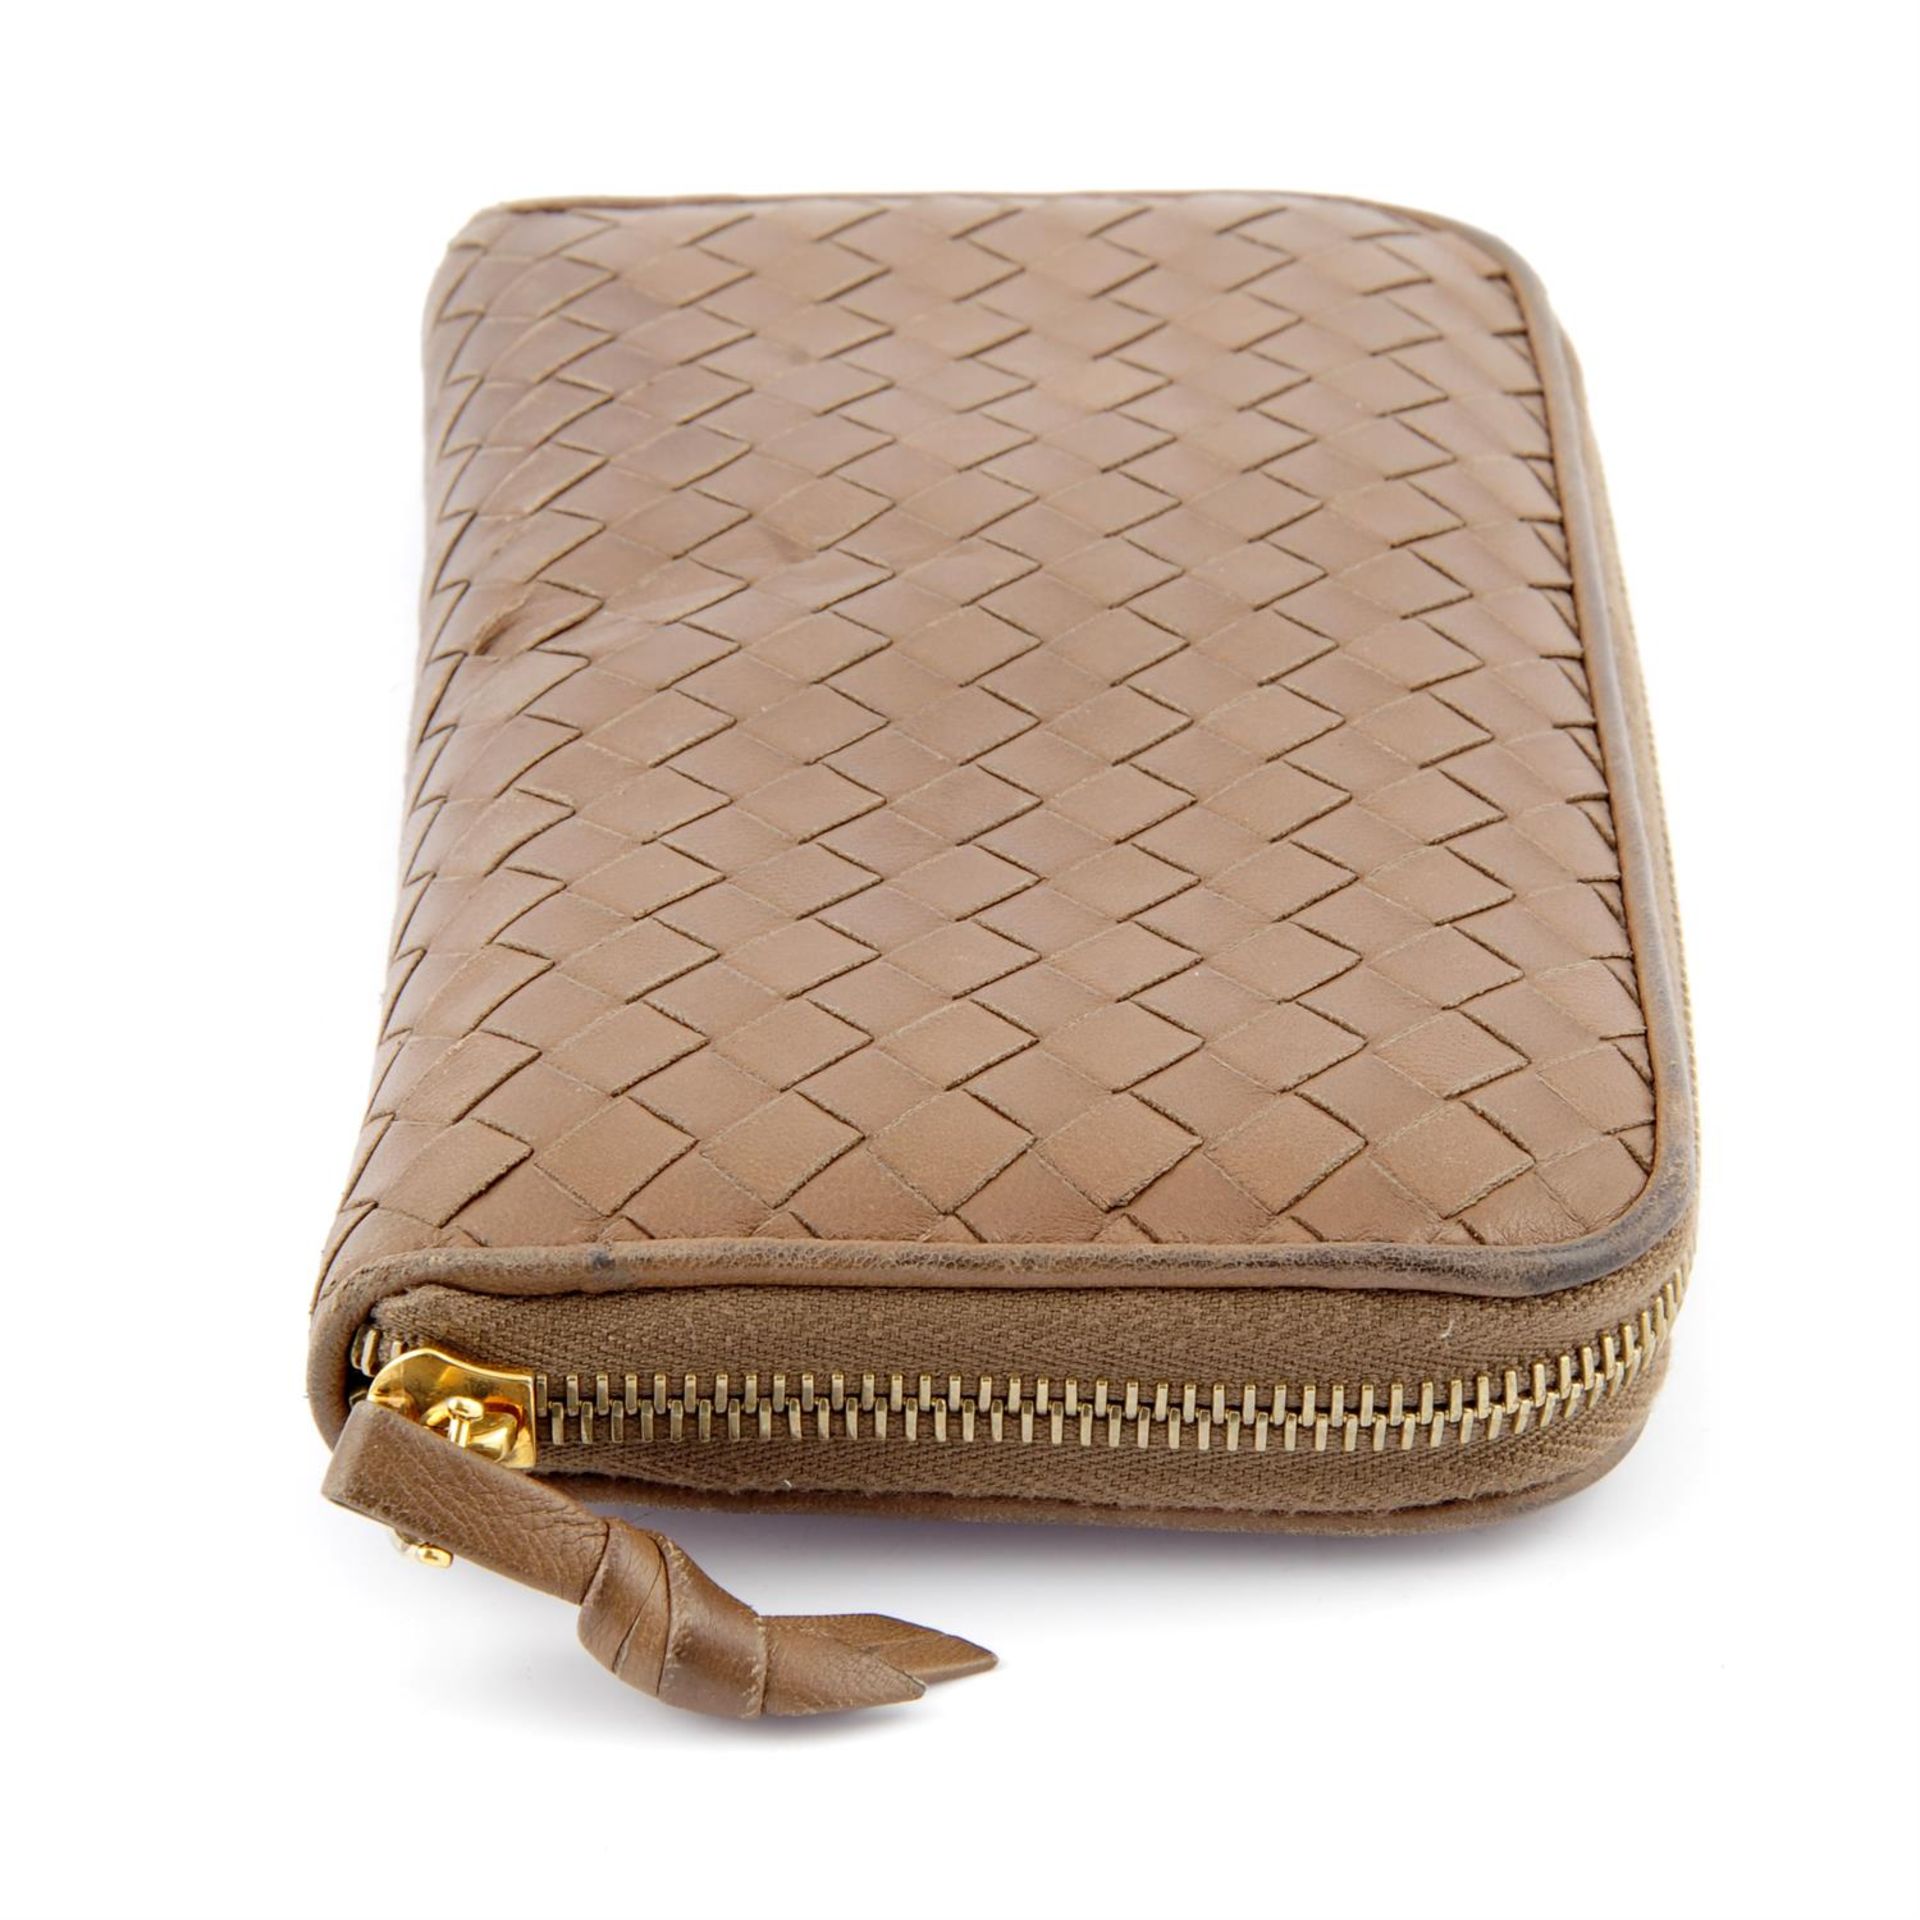 BOTTEGA VENETA - a Intrecciato leather Zippy wallet. - Image 3 of 4